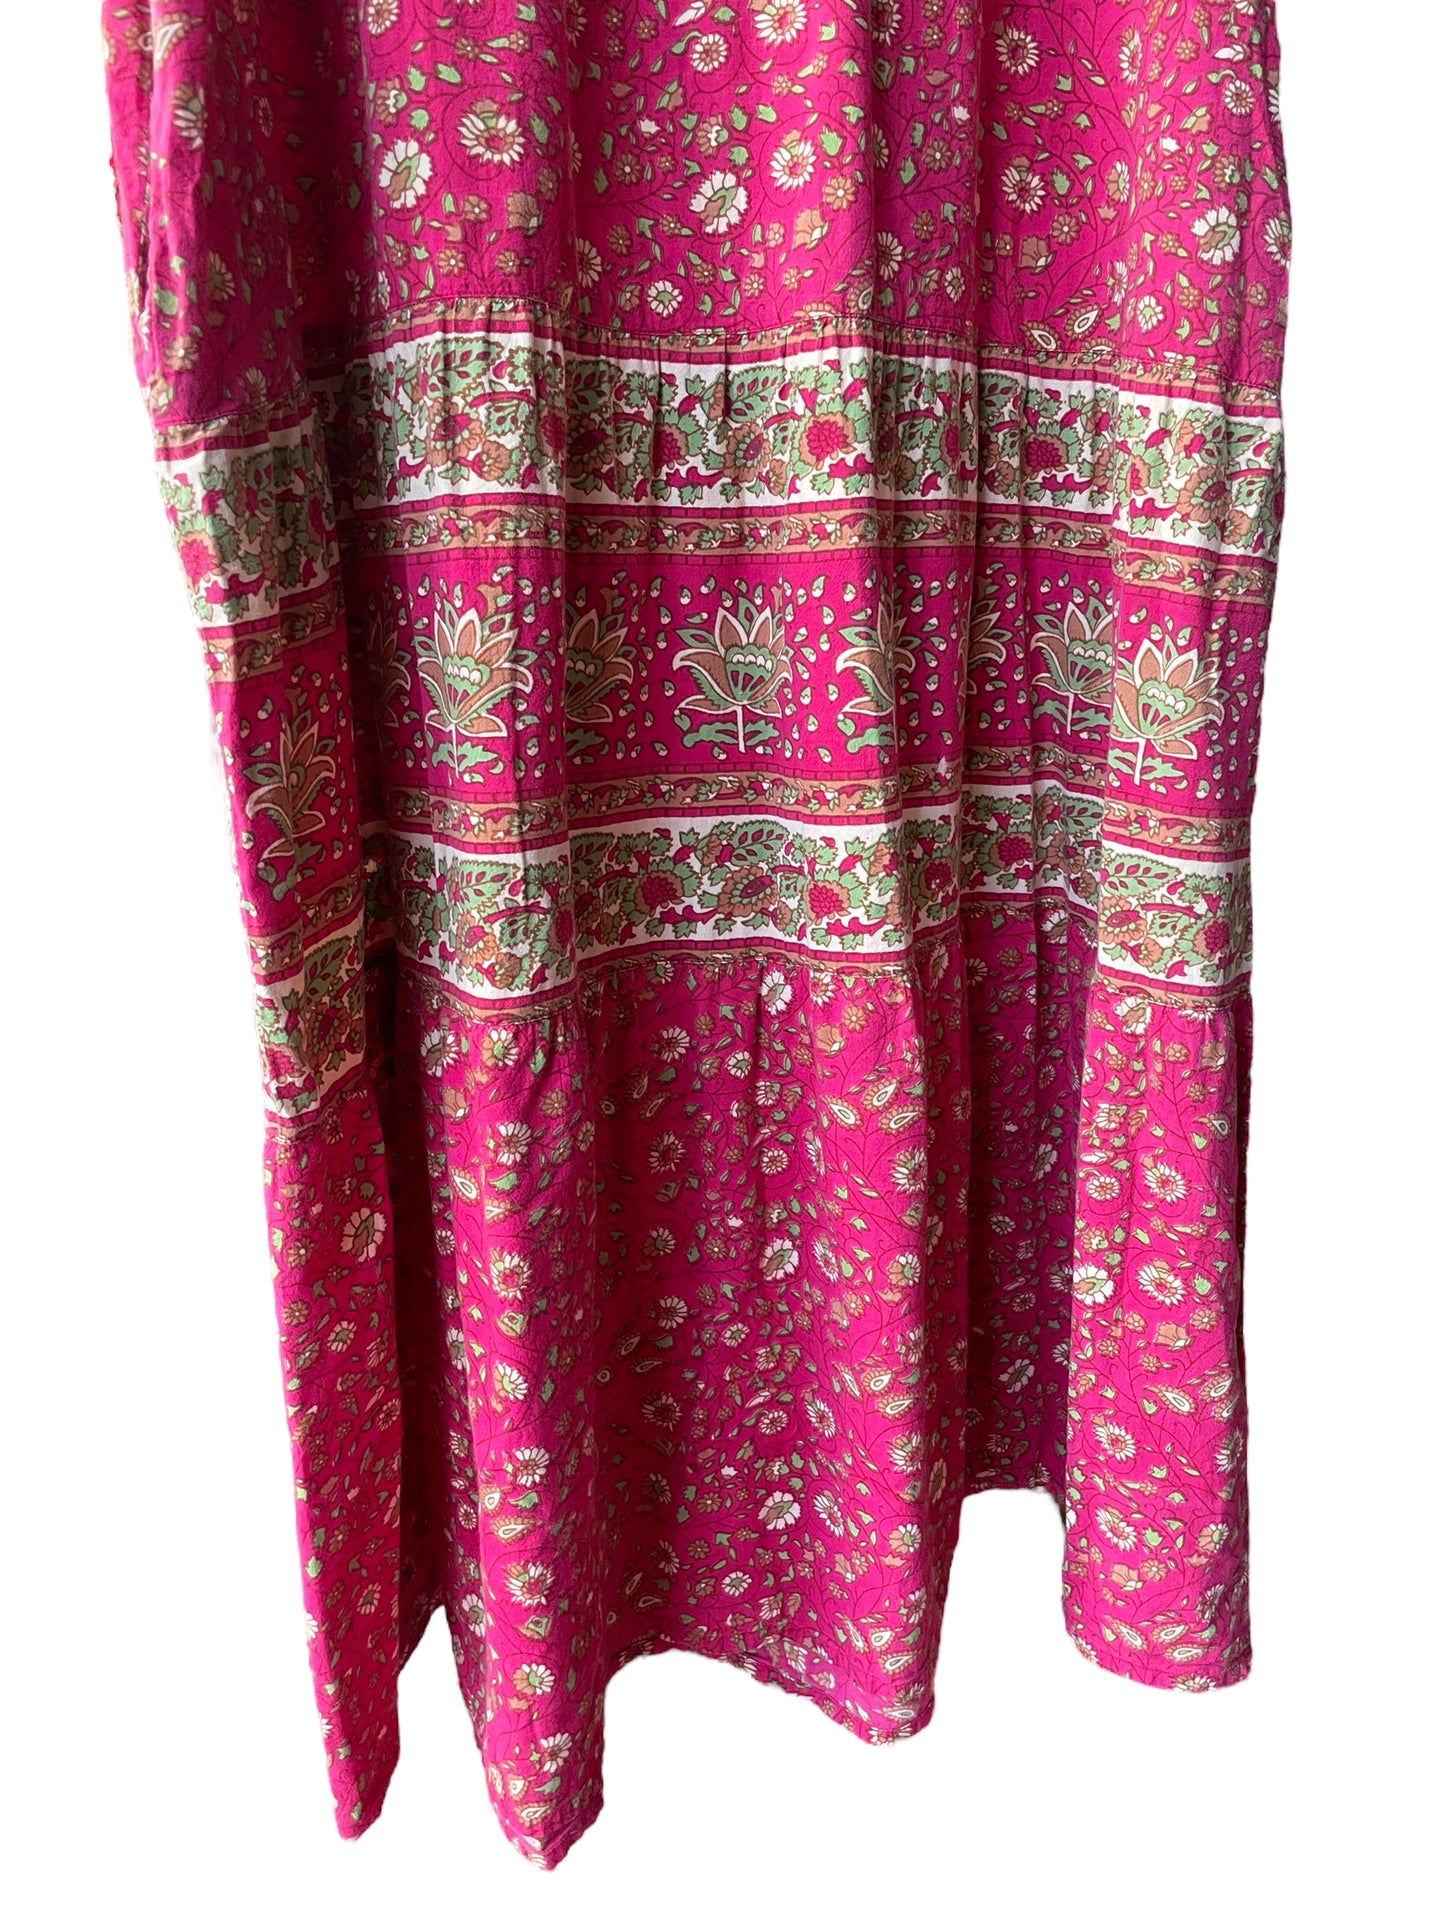 Bottom skirt detail Vintage 1970s Indian Cotton Dress Sz XL